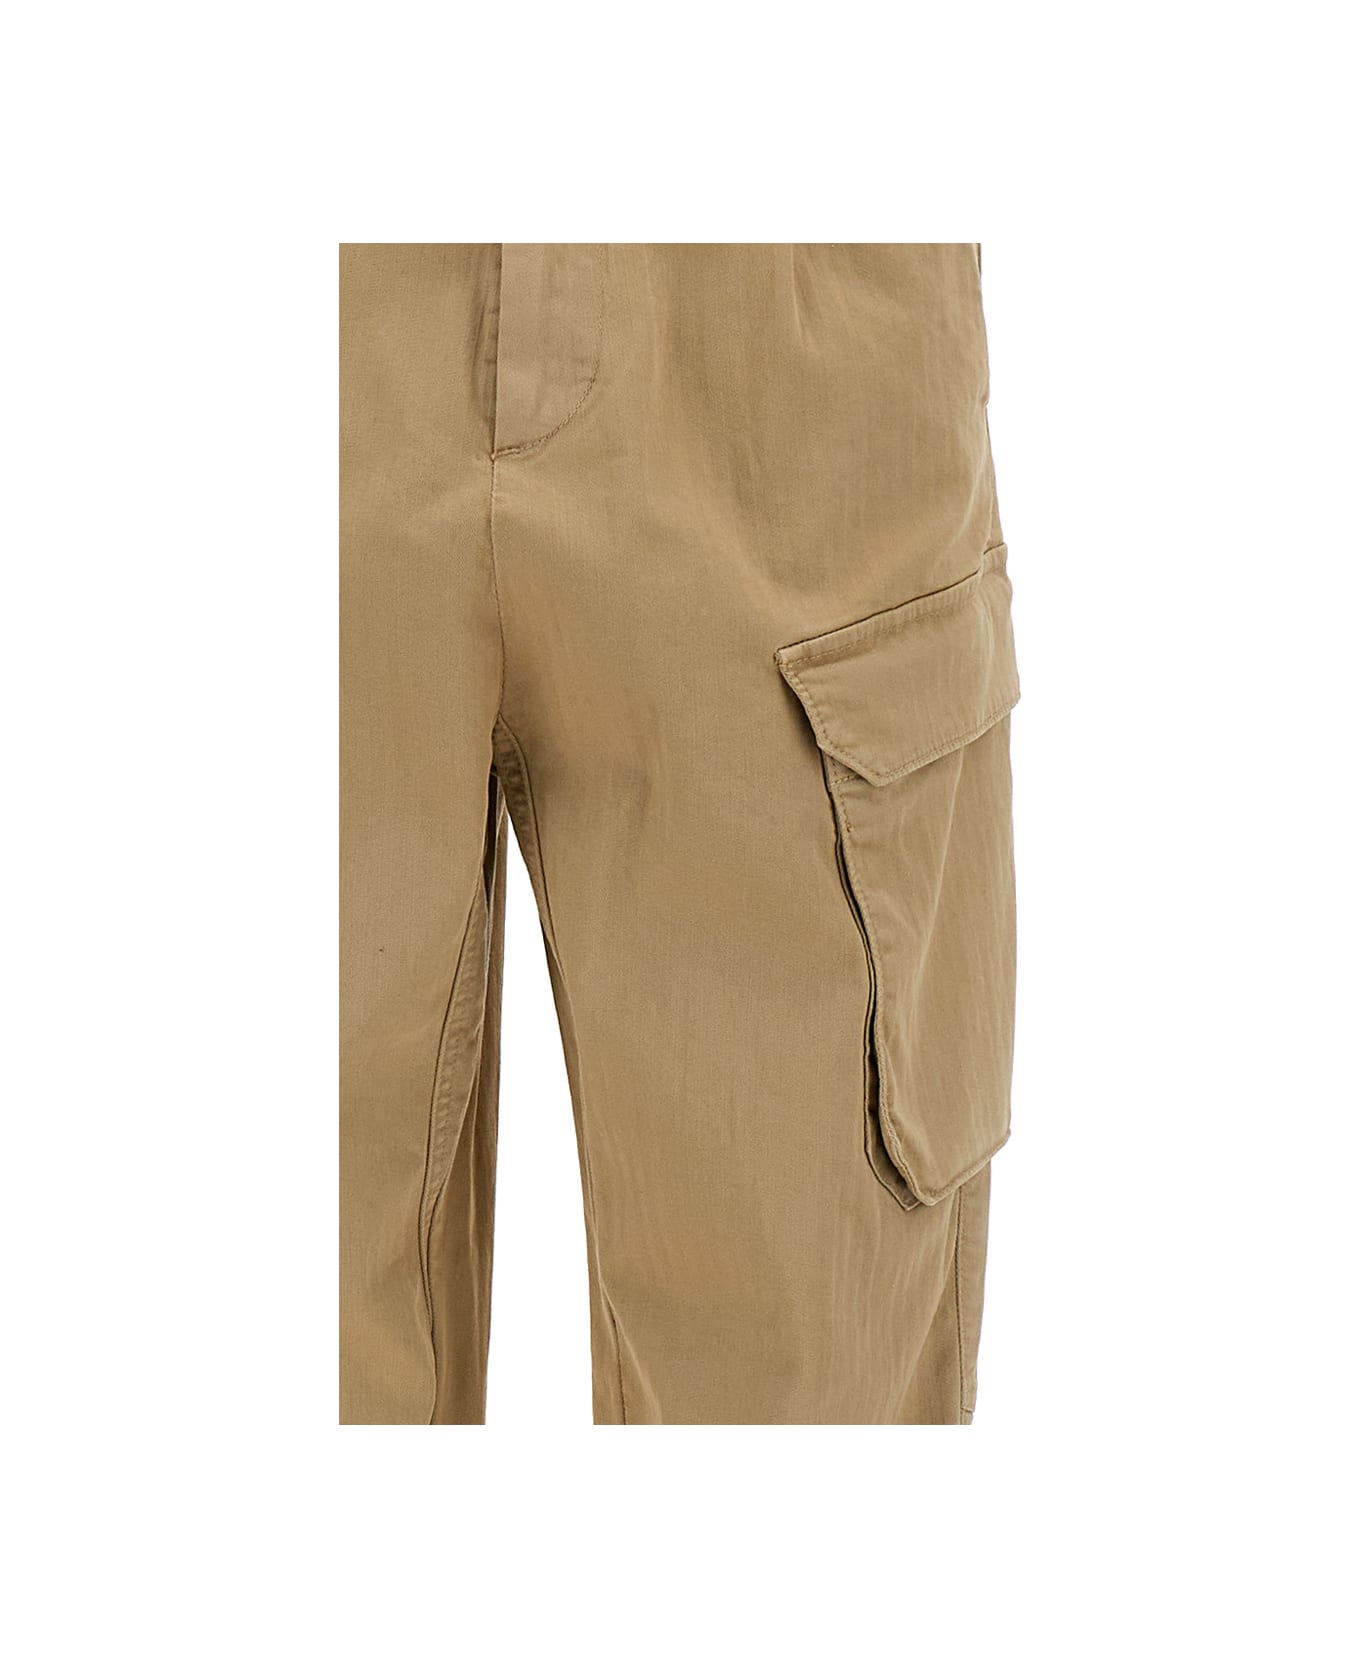 SEMICOUTURE Bianca Cotton Cargo Pants - Beige